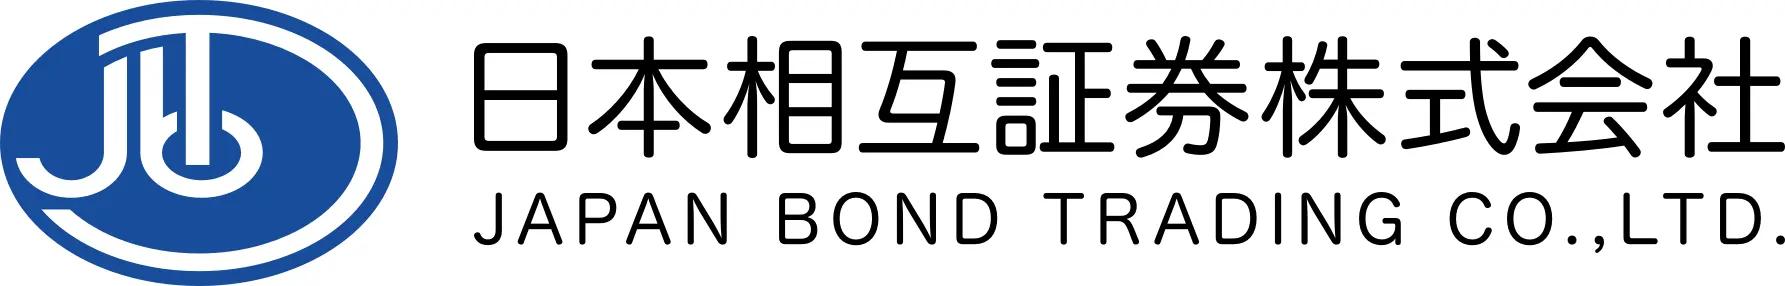 Japan Bond Trading